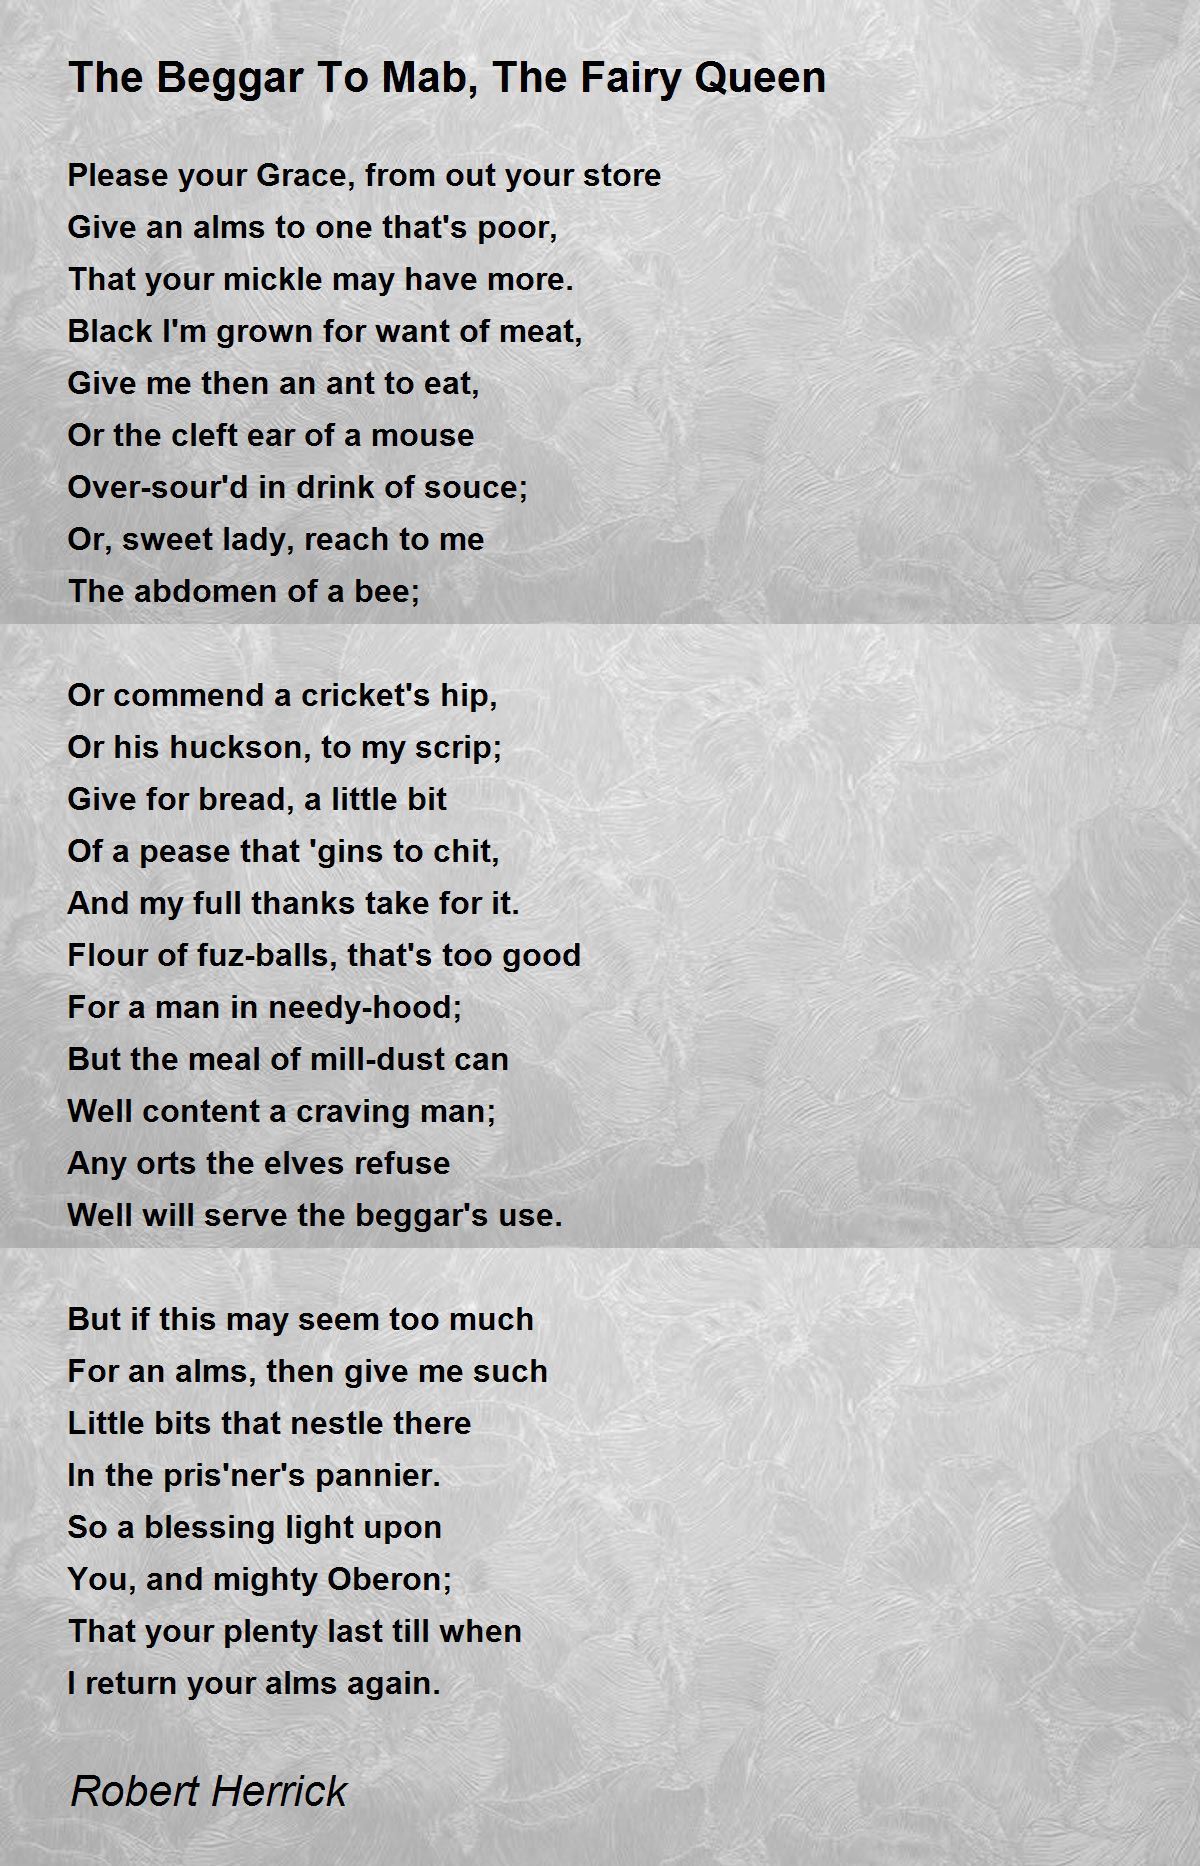 The Beggar To Mab, The Fairy Queen Poem by Robert Herrick - Poem Hunter